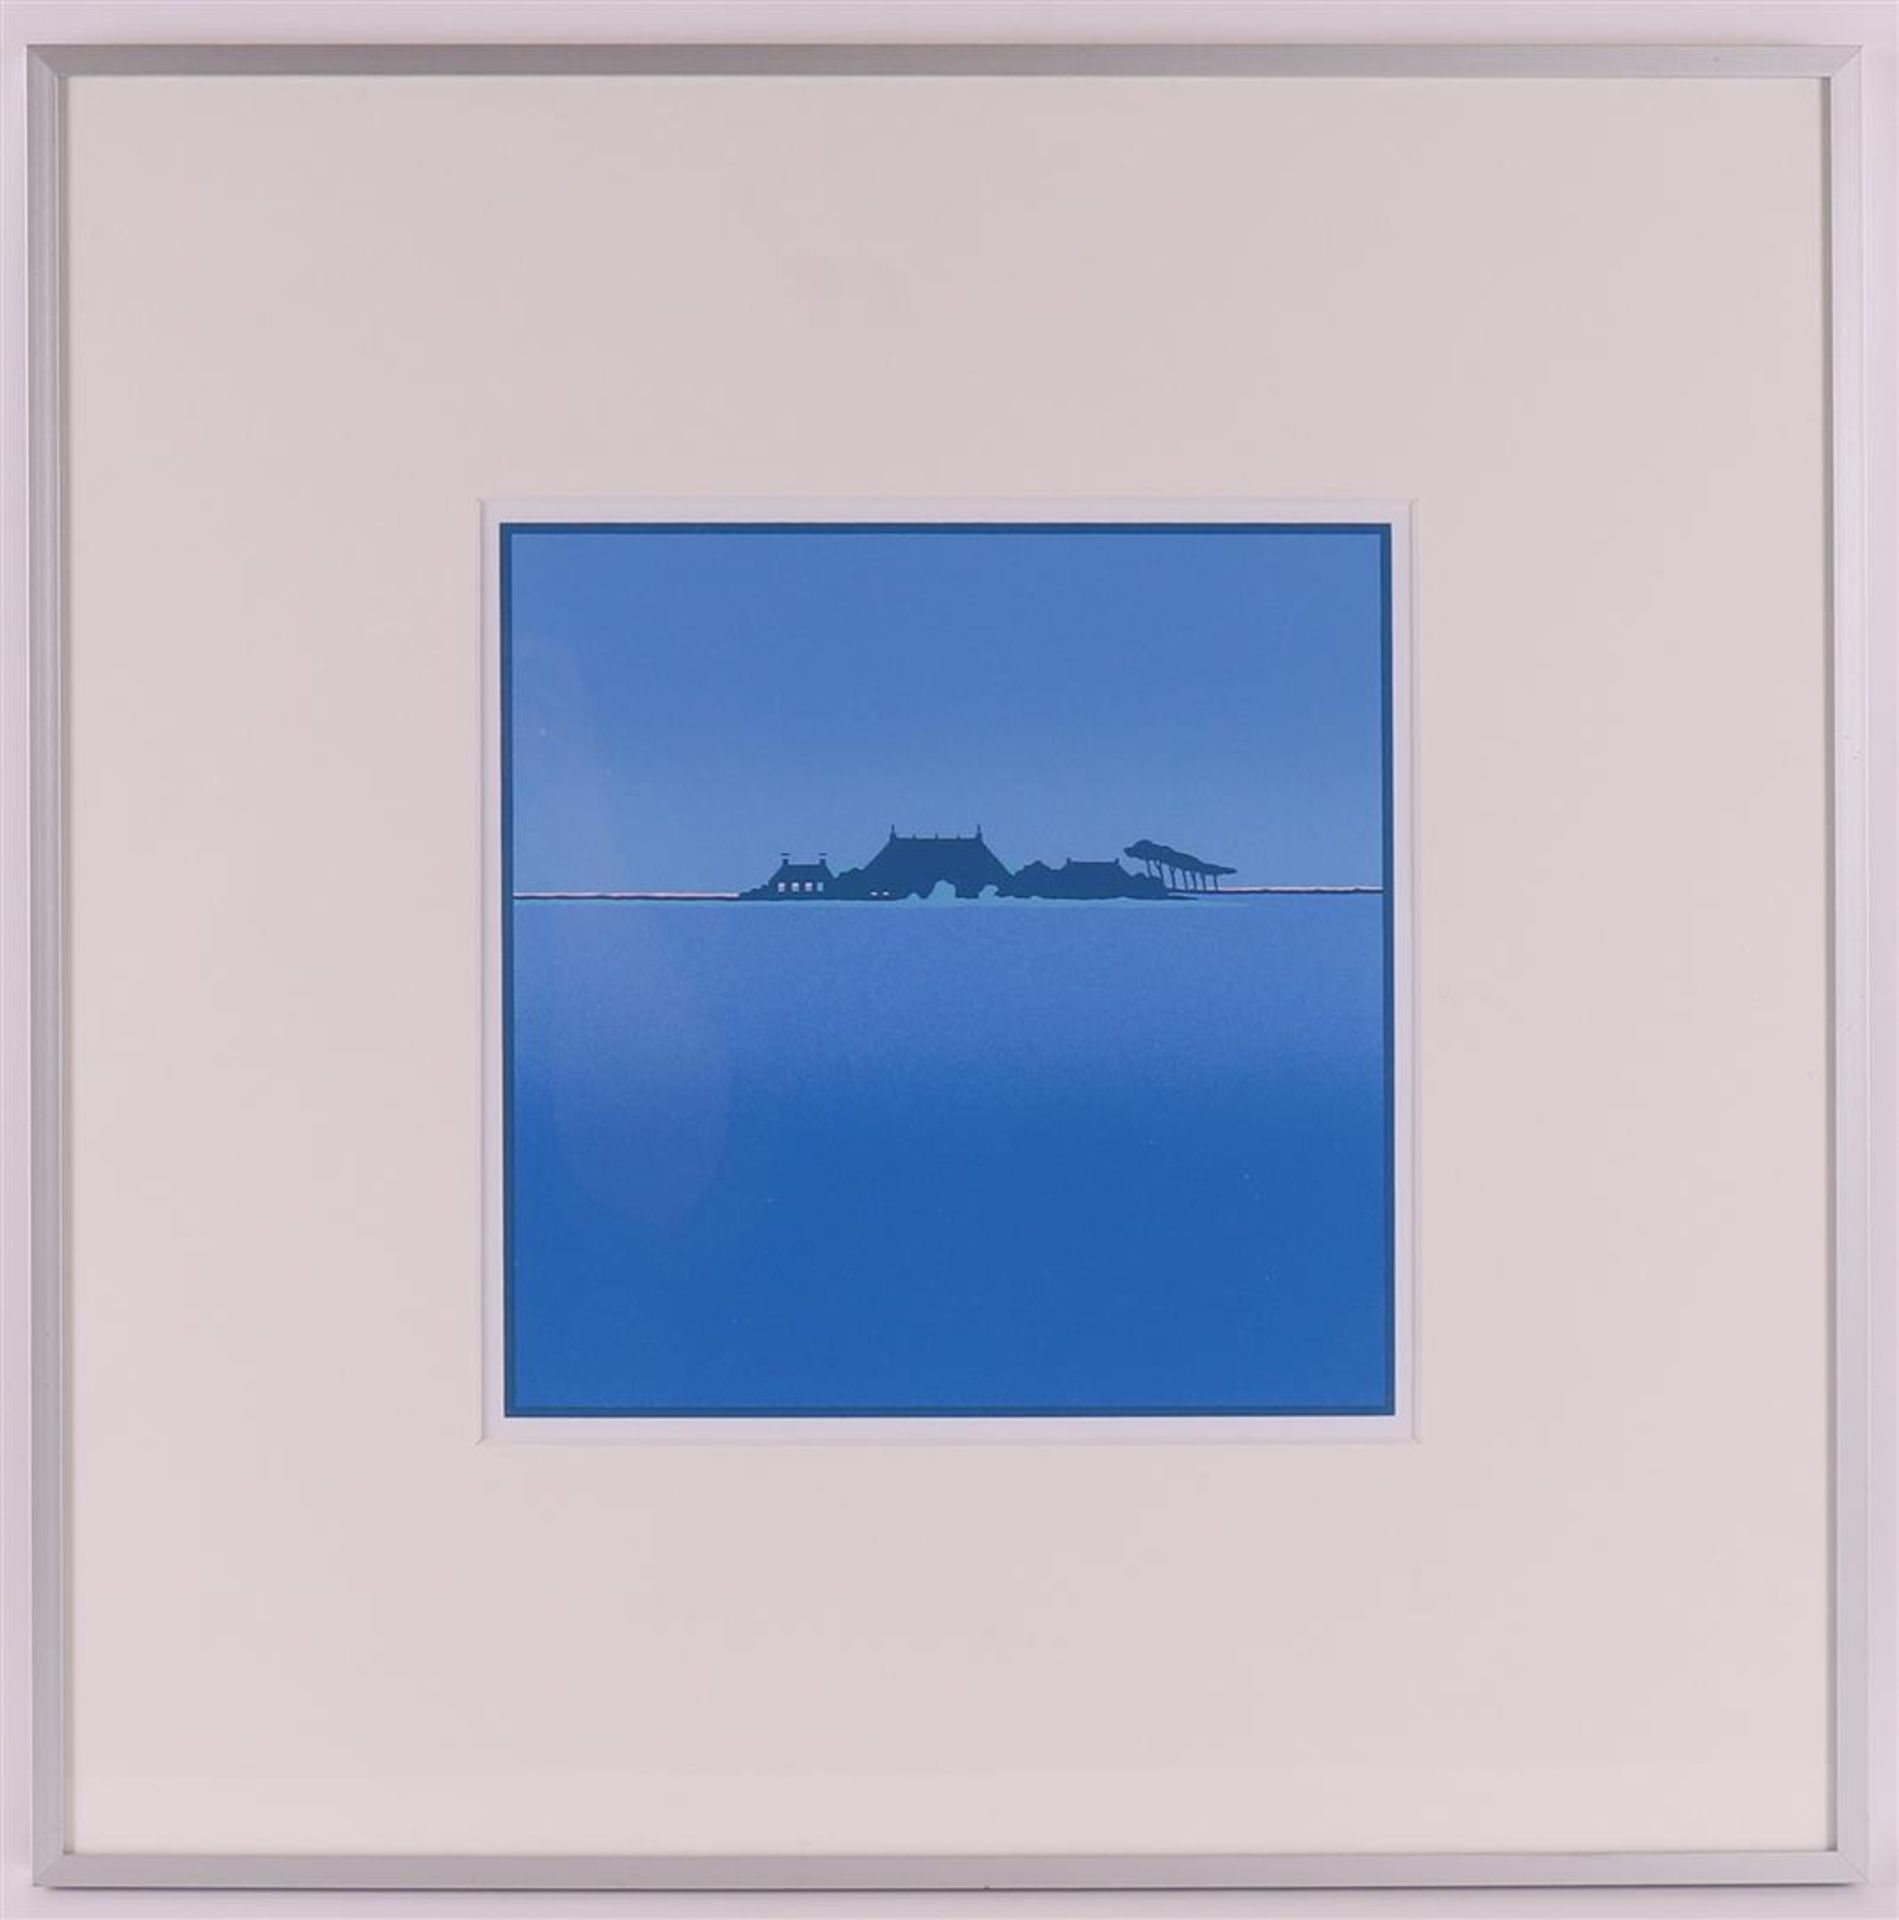 Janssen, Han (1931-1994) "Groninger landscape", silkscreen/paper, h 24.5 x w24.5 cm.